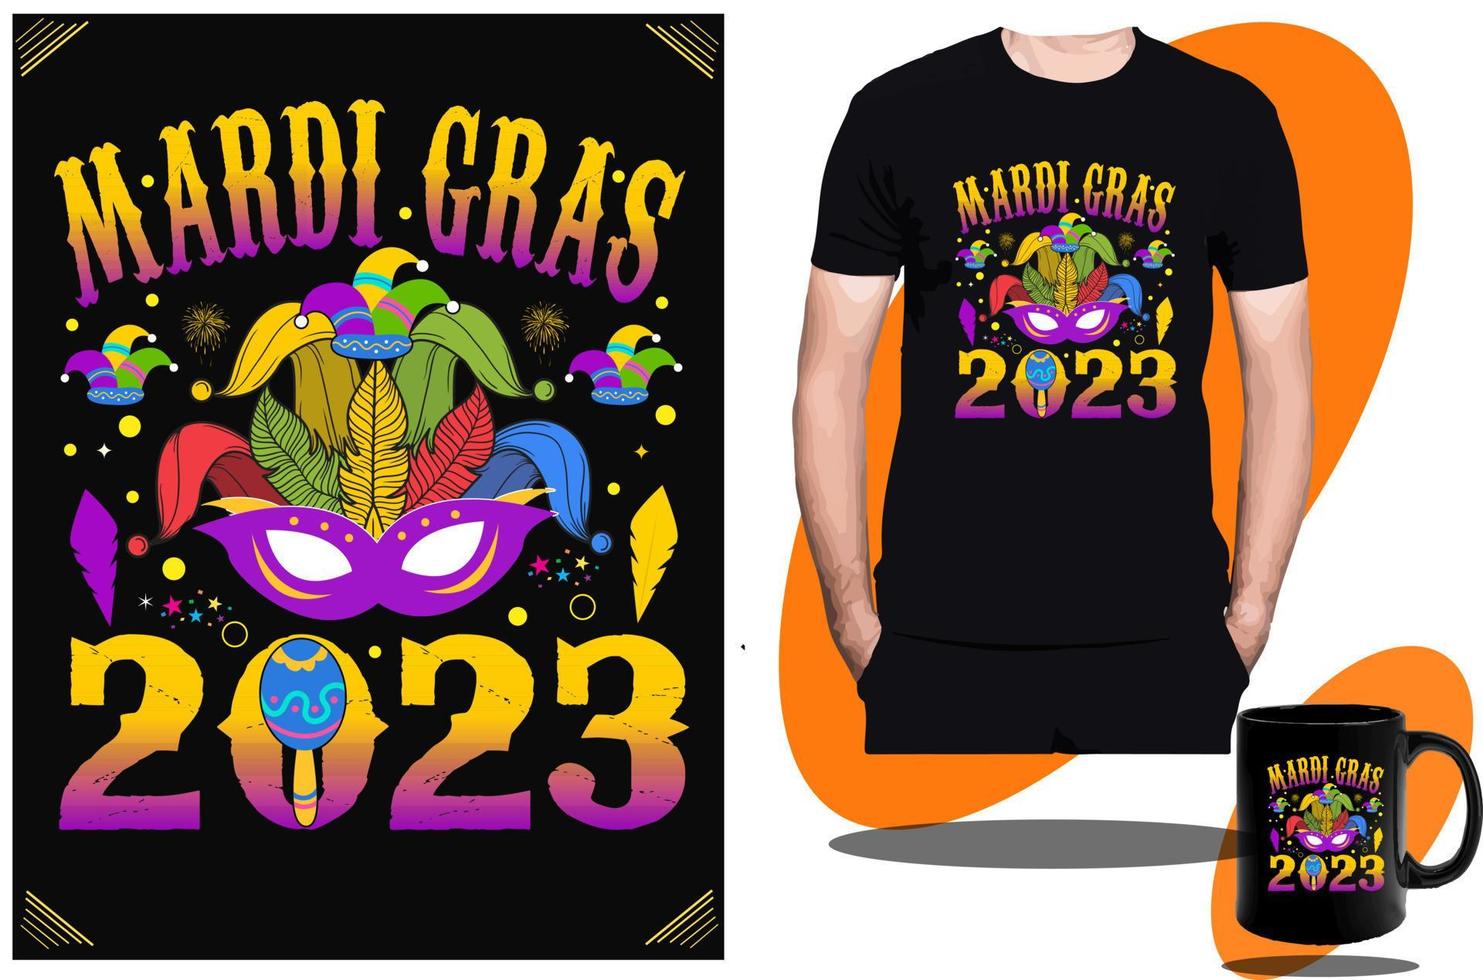 karneval 2023 und karnevalsparty, flagge, craw, t-shirt-design oder vorlage. vektor